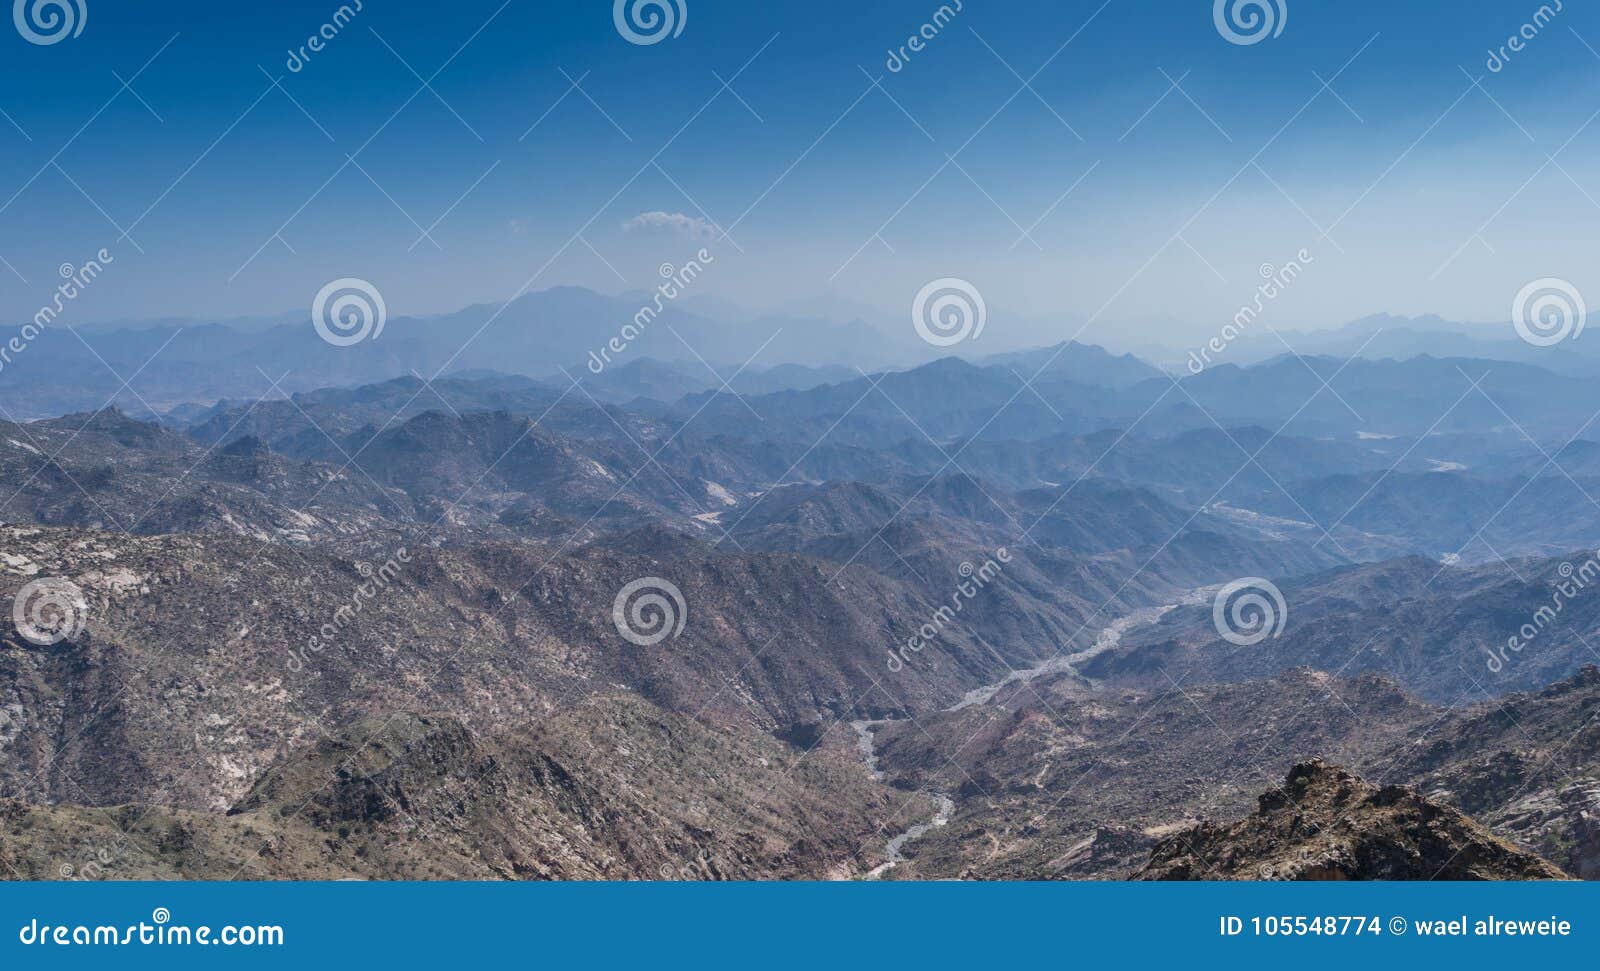 al hada mountain in taif city, saudi arabia with beautiful view of mountains and al hada road inbetween the mountains.